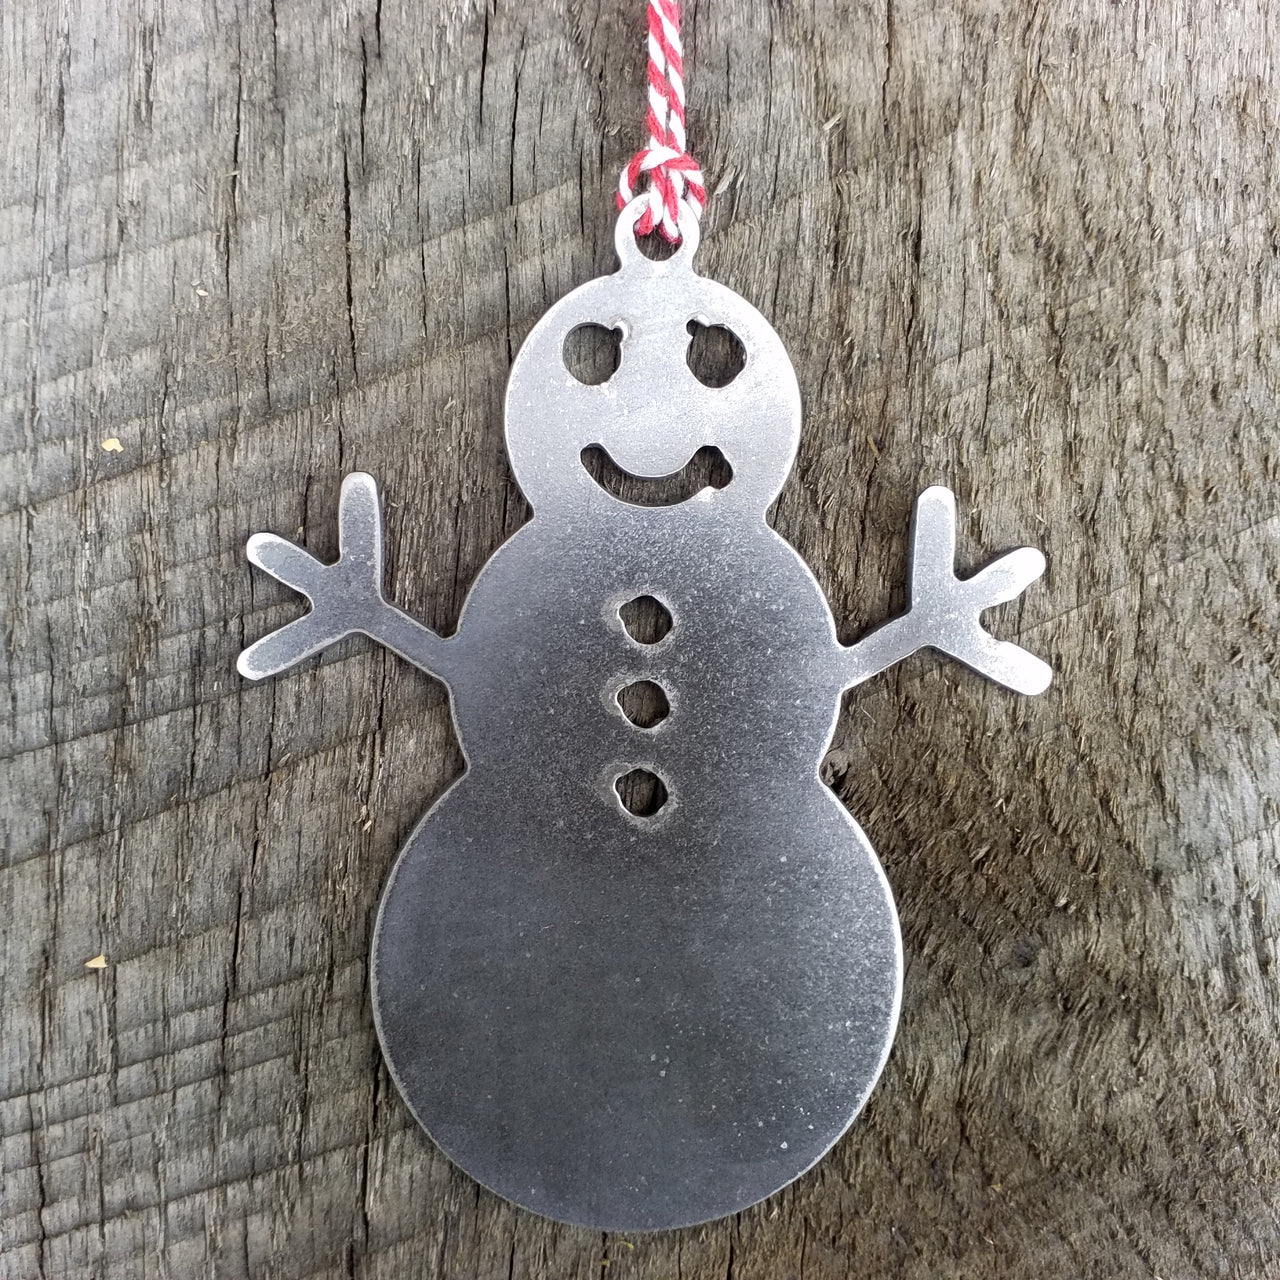 Snow Man Christmas Ornament - FREE SHIPPING, Stocking Stuffer, Holiday Gift, Tree